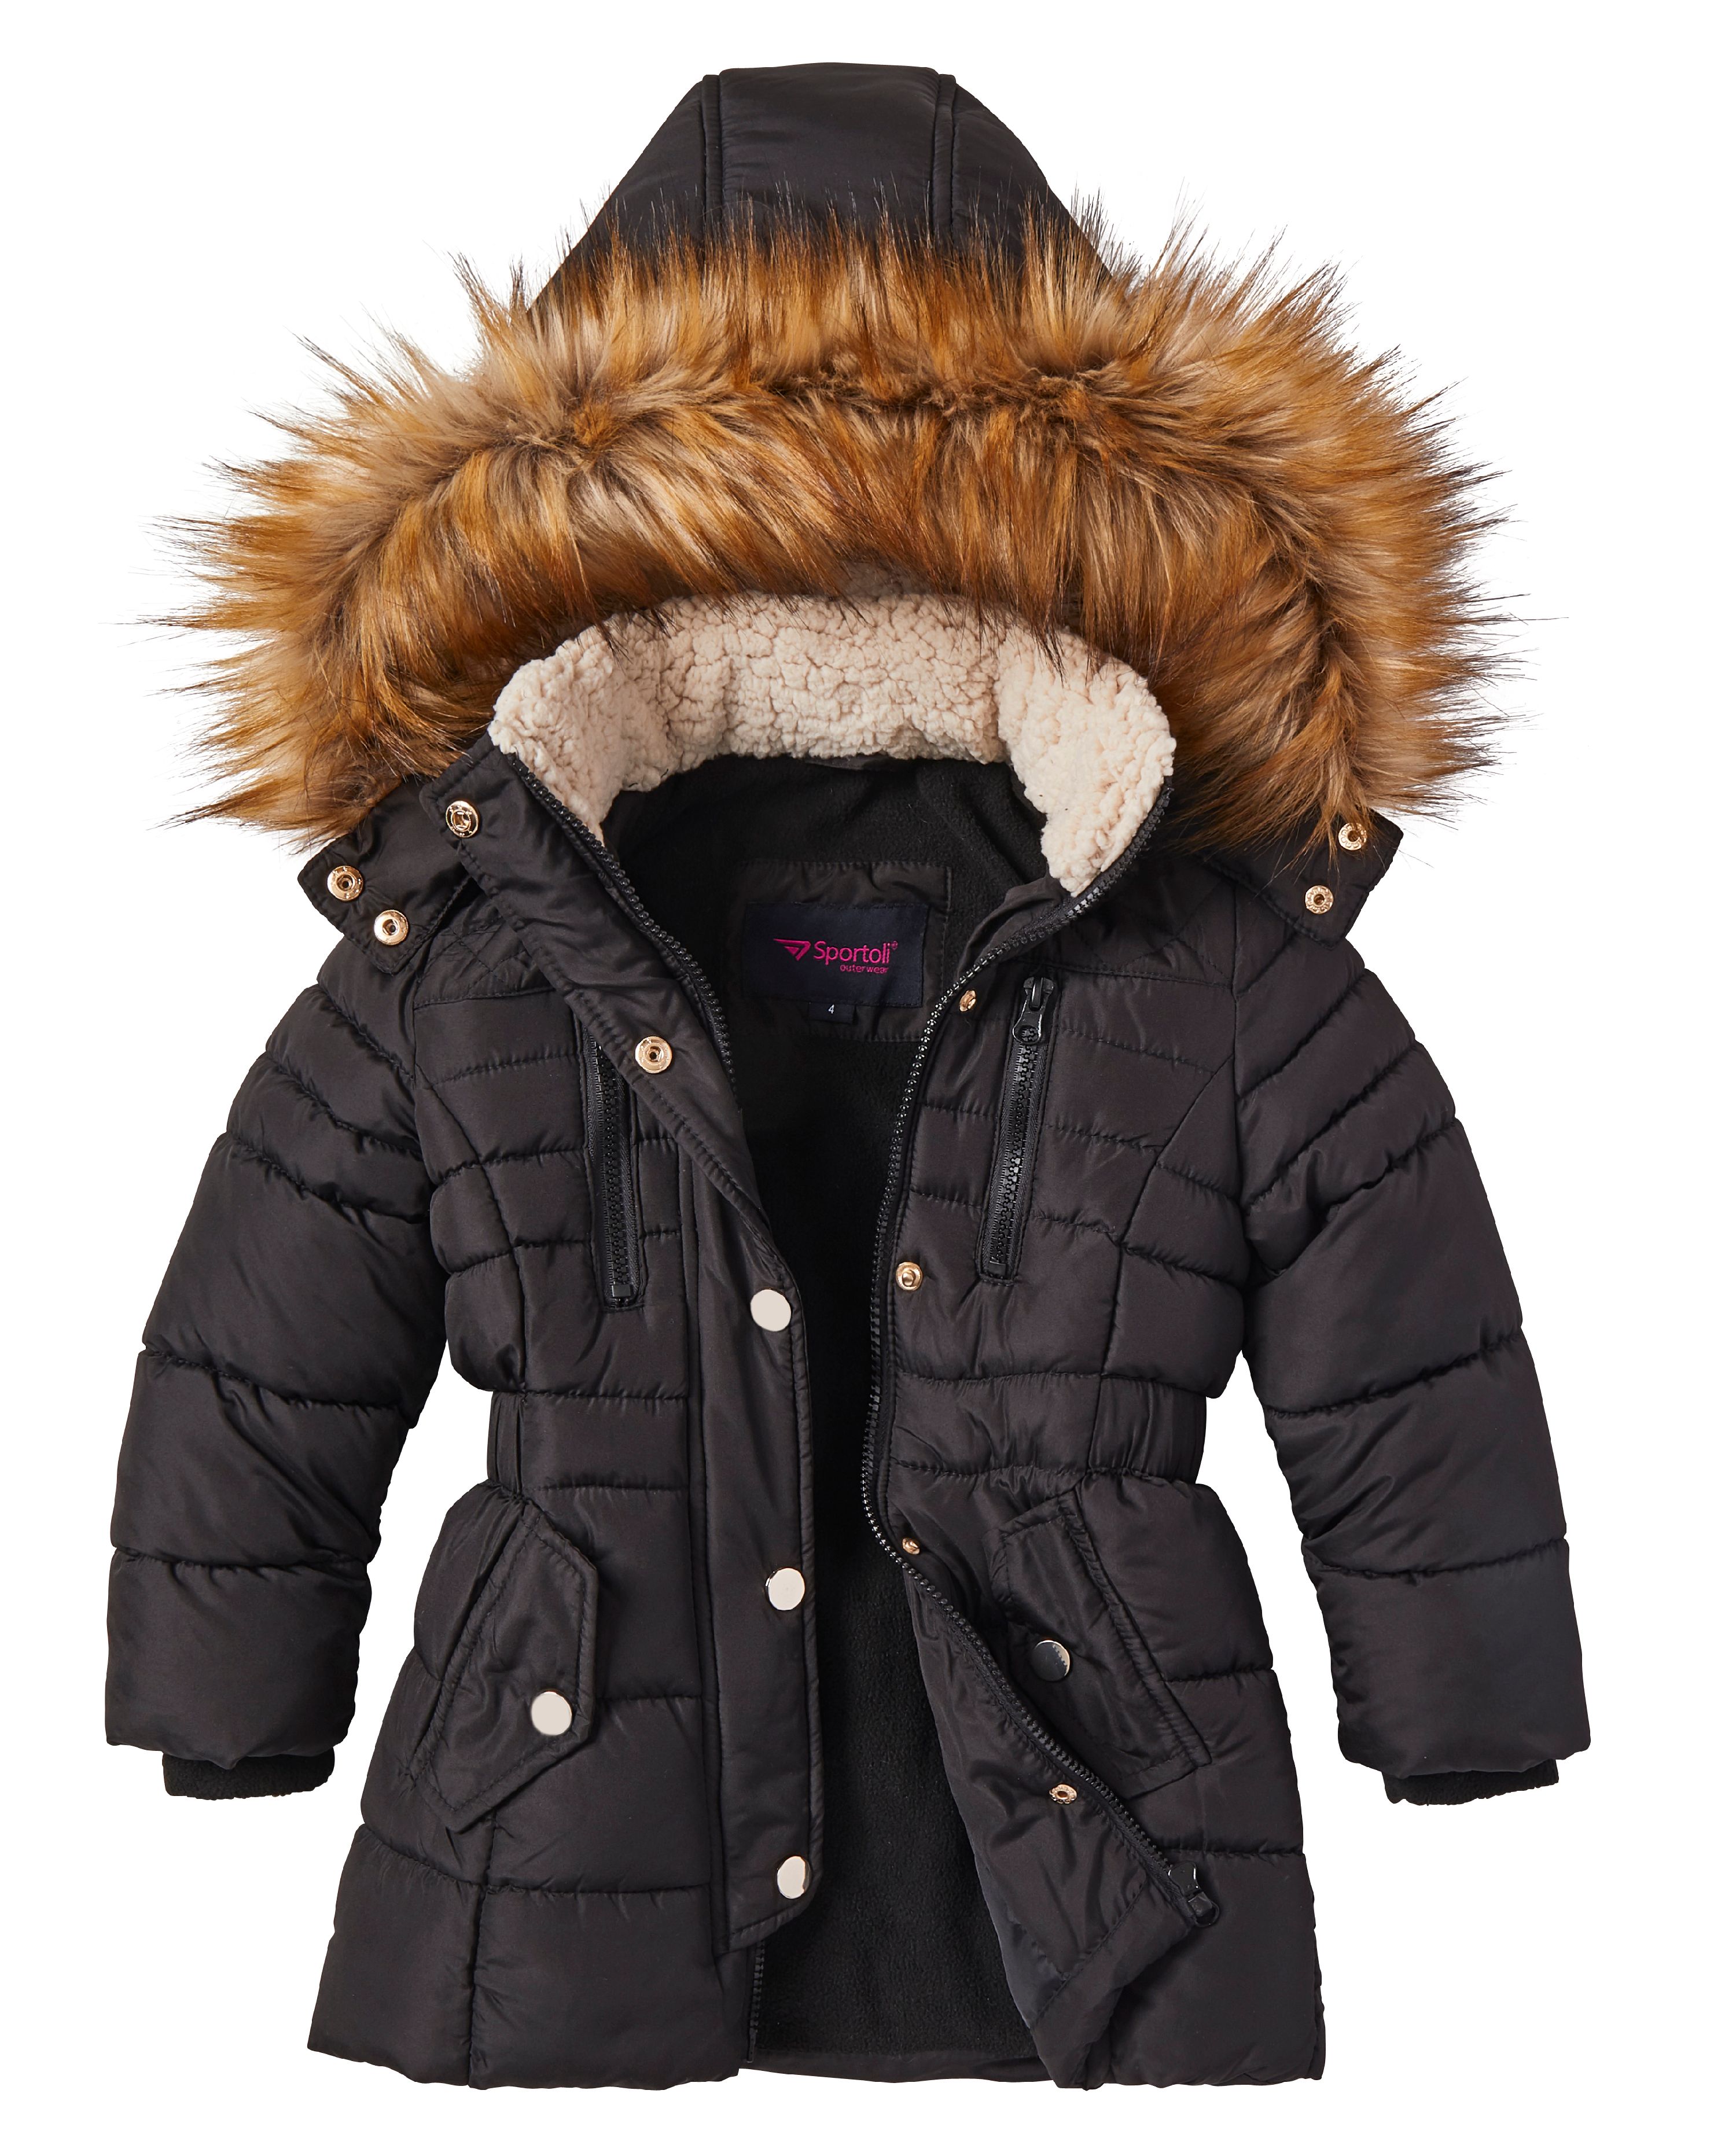 Good Lad Infant Girls Creme Hooded Fleece Coat with Fur Trim on Collar and Hood